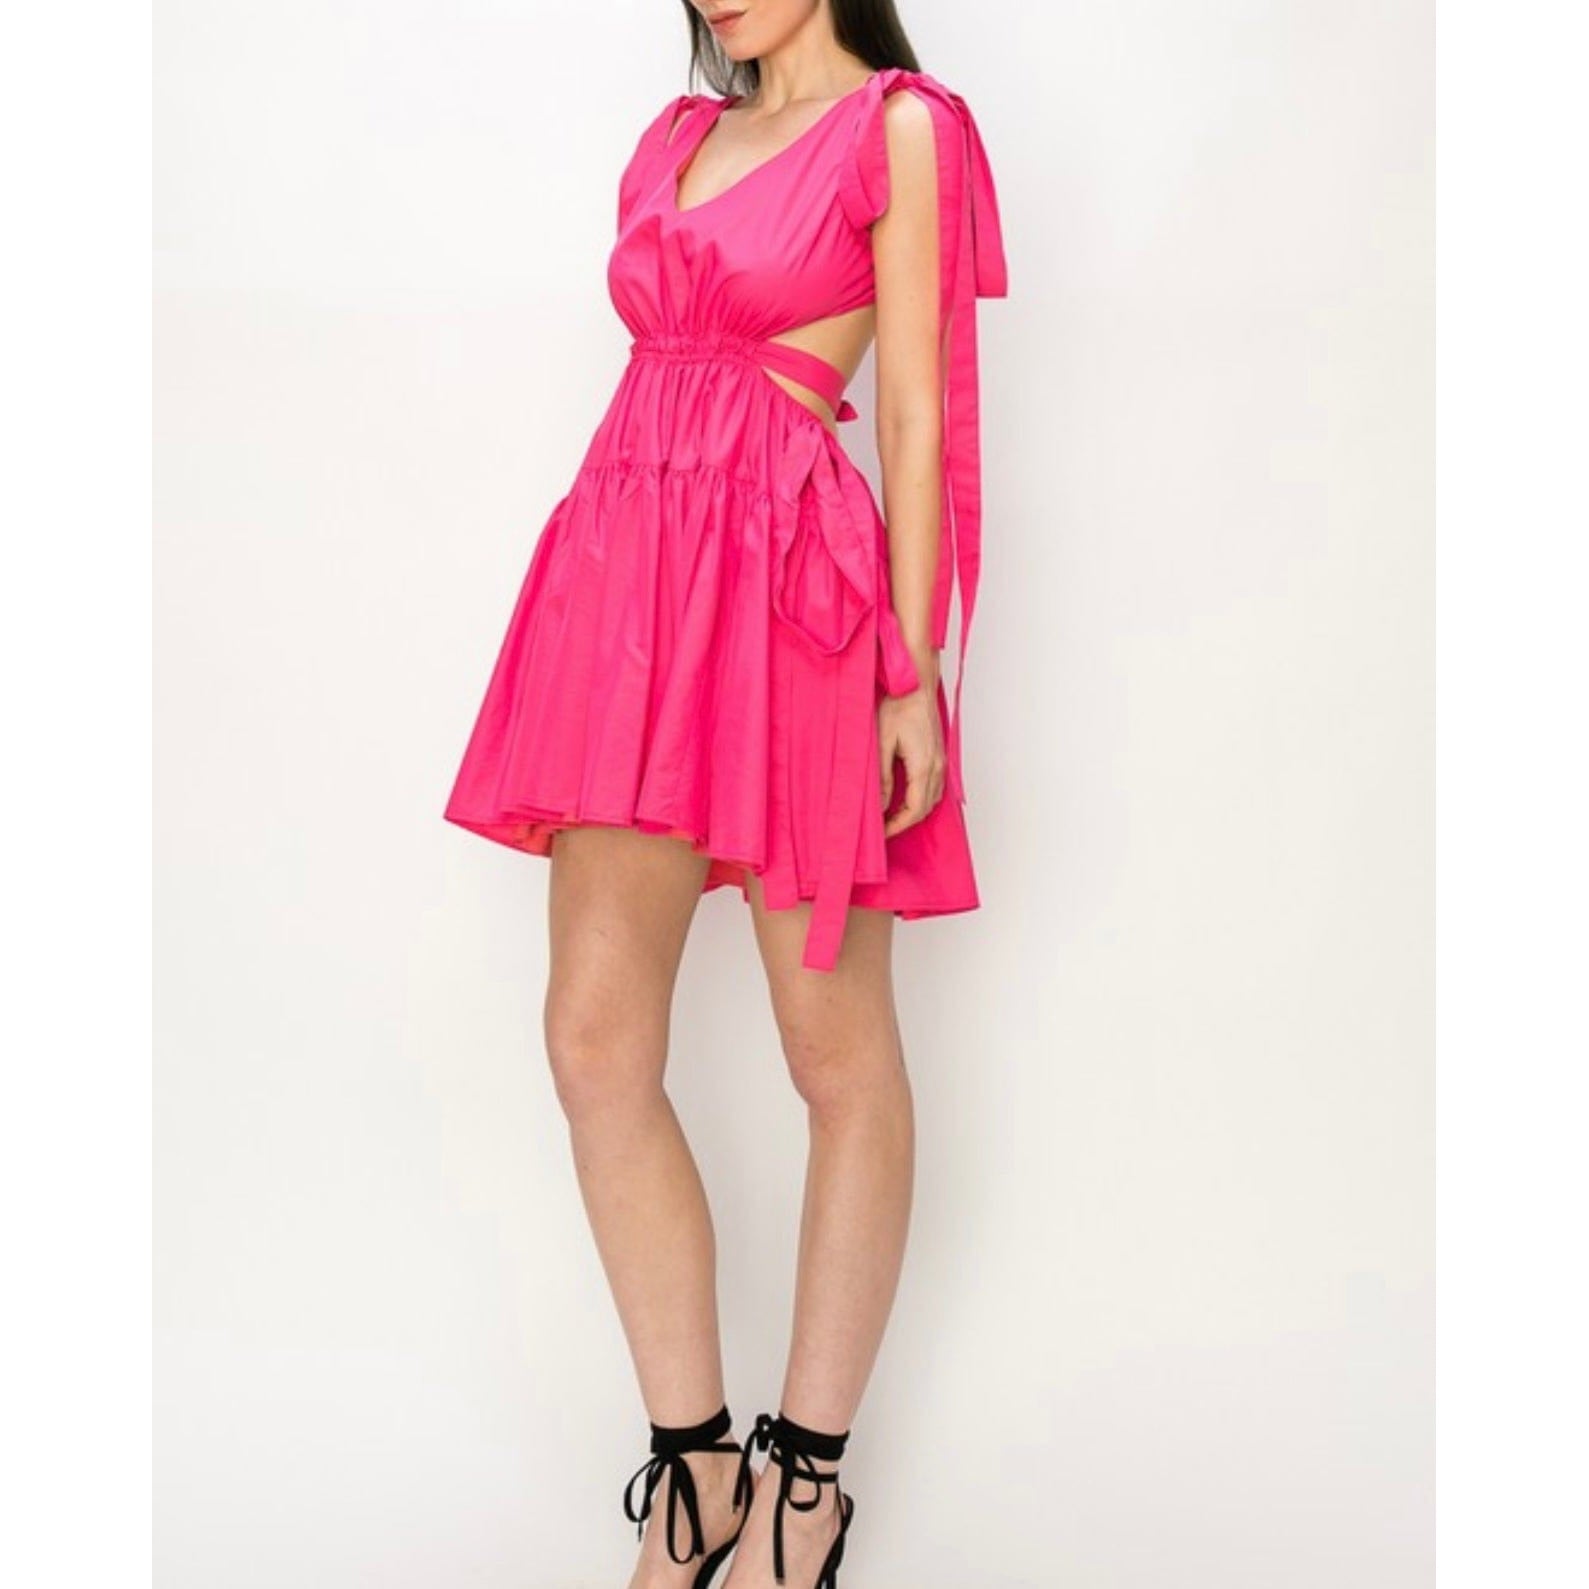 Apparel & Accessories Pink Cutout Doll Dress